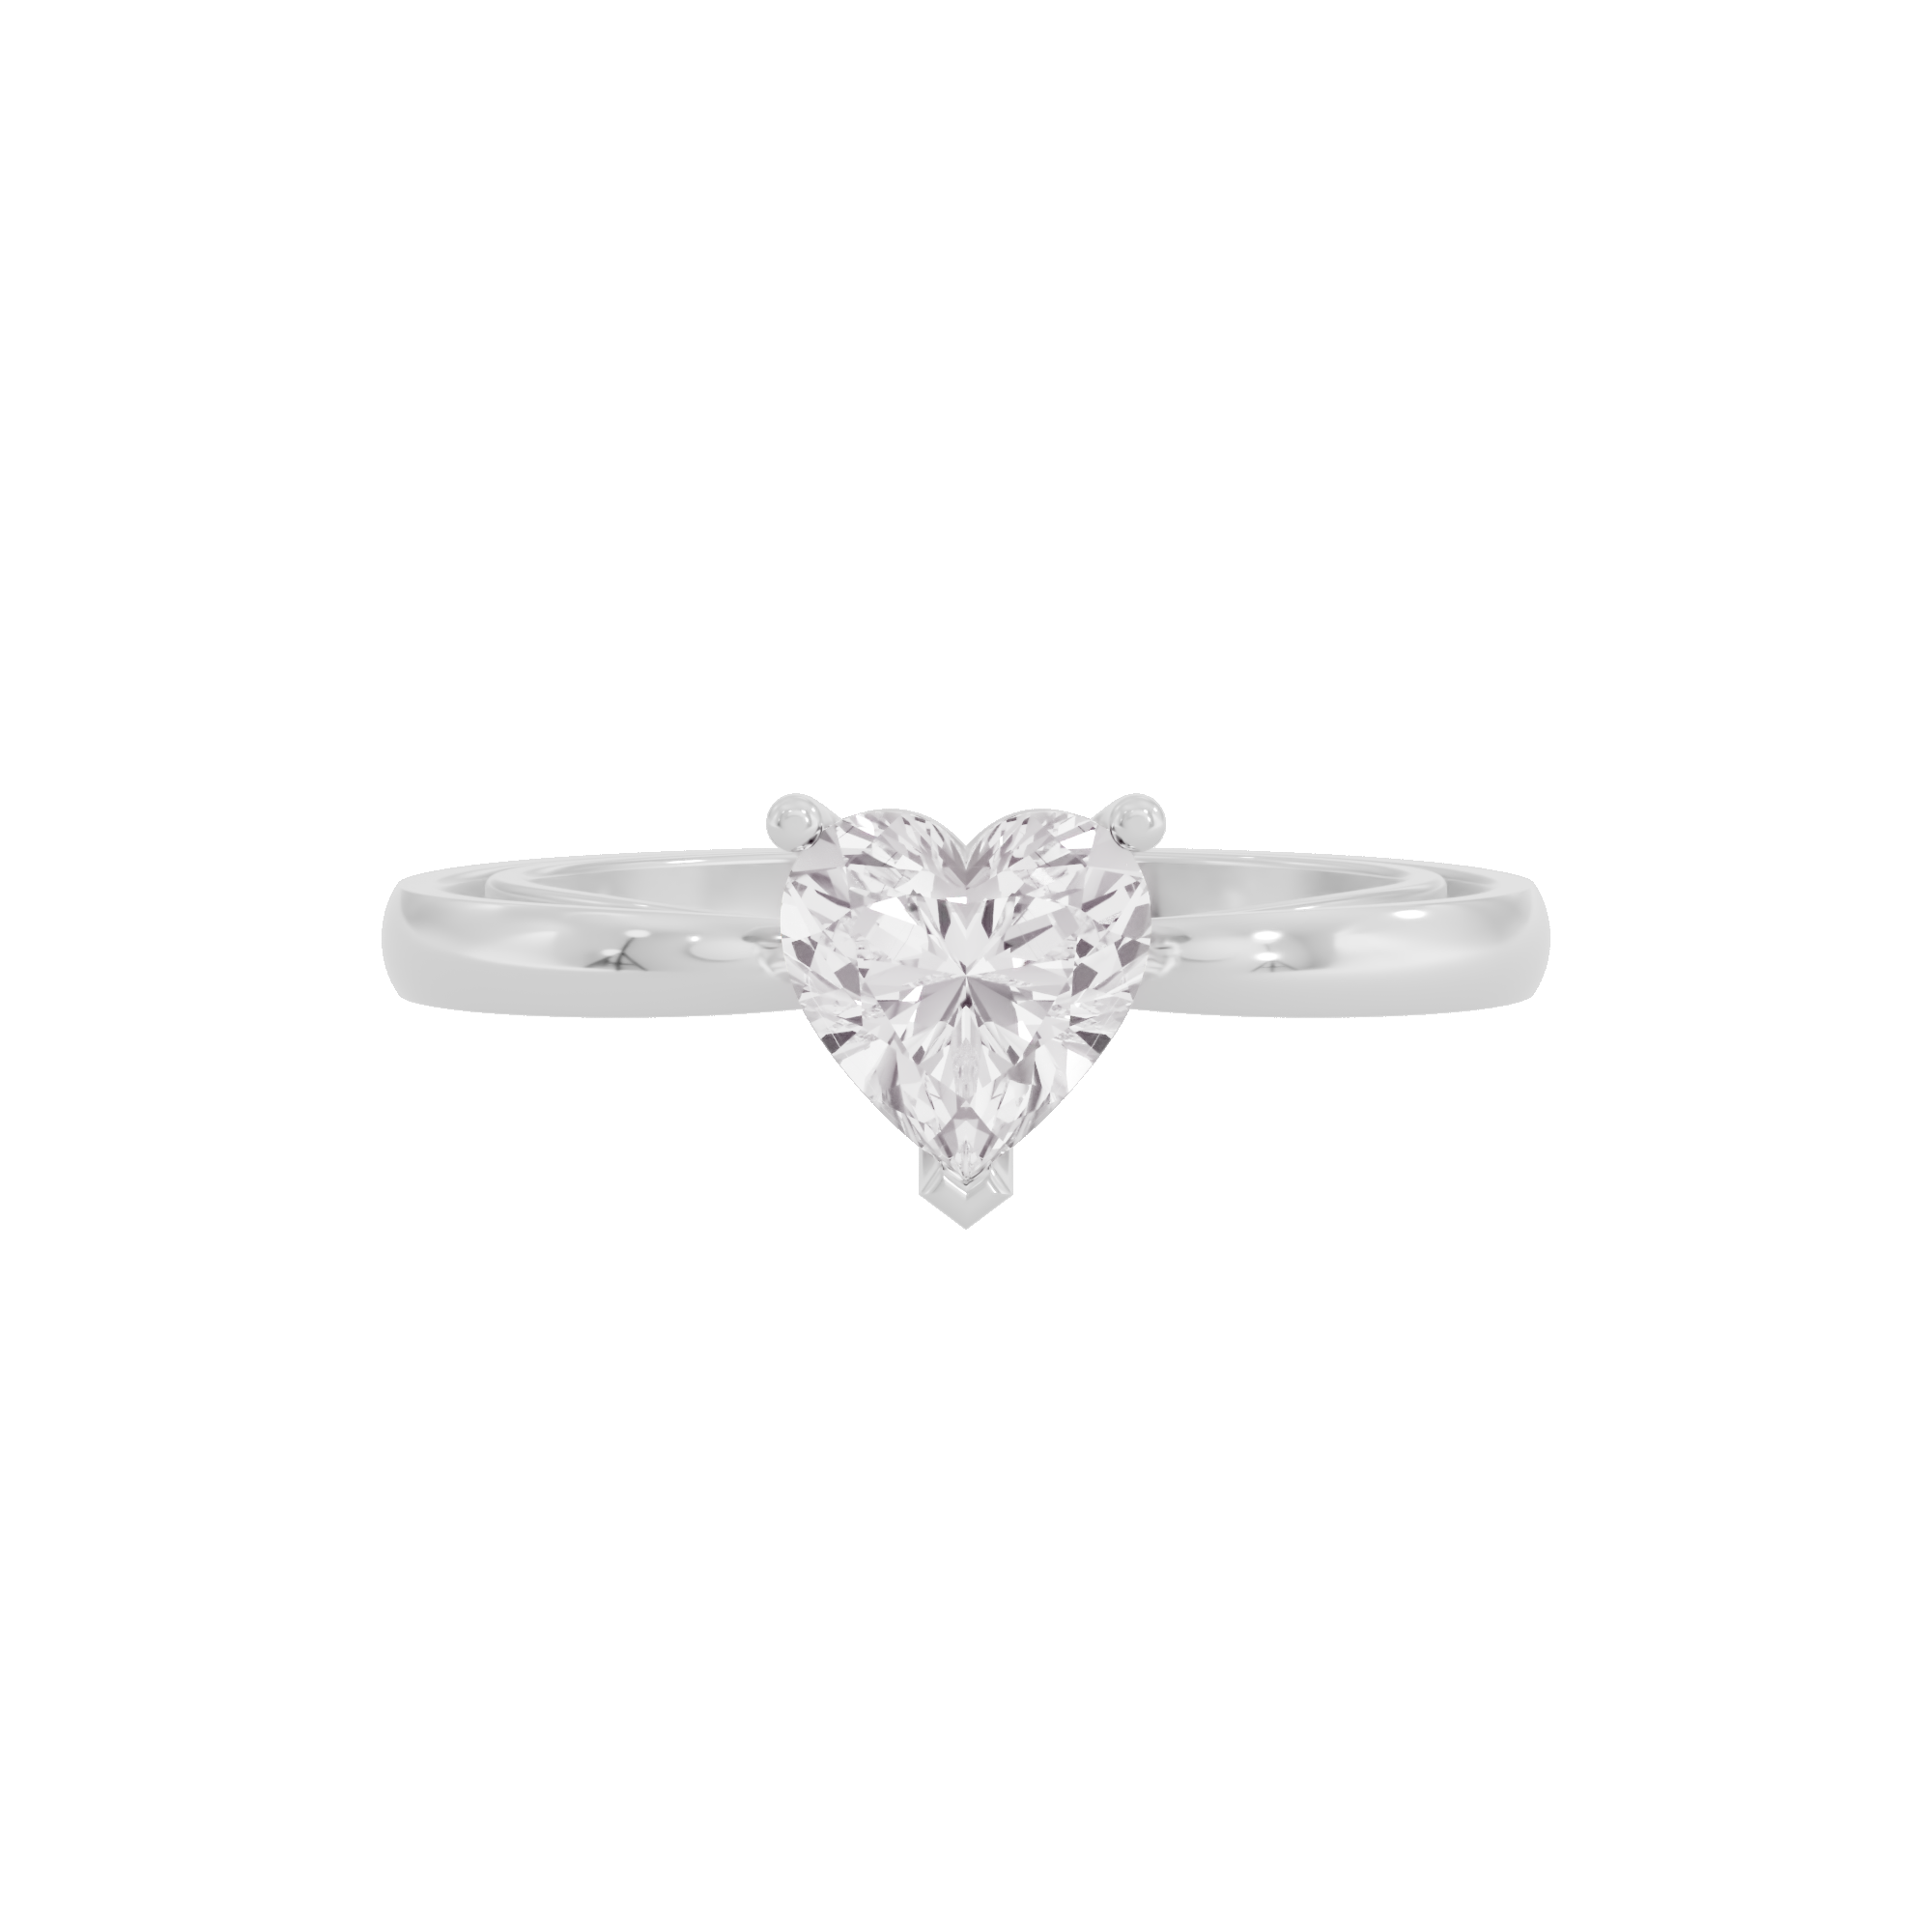 Radiant Essence Diamond Ring